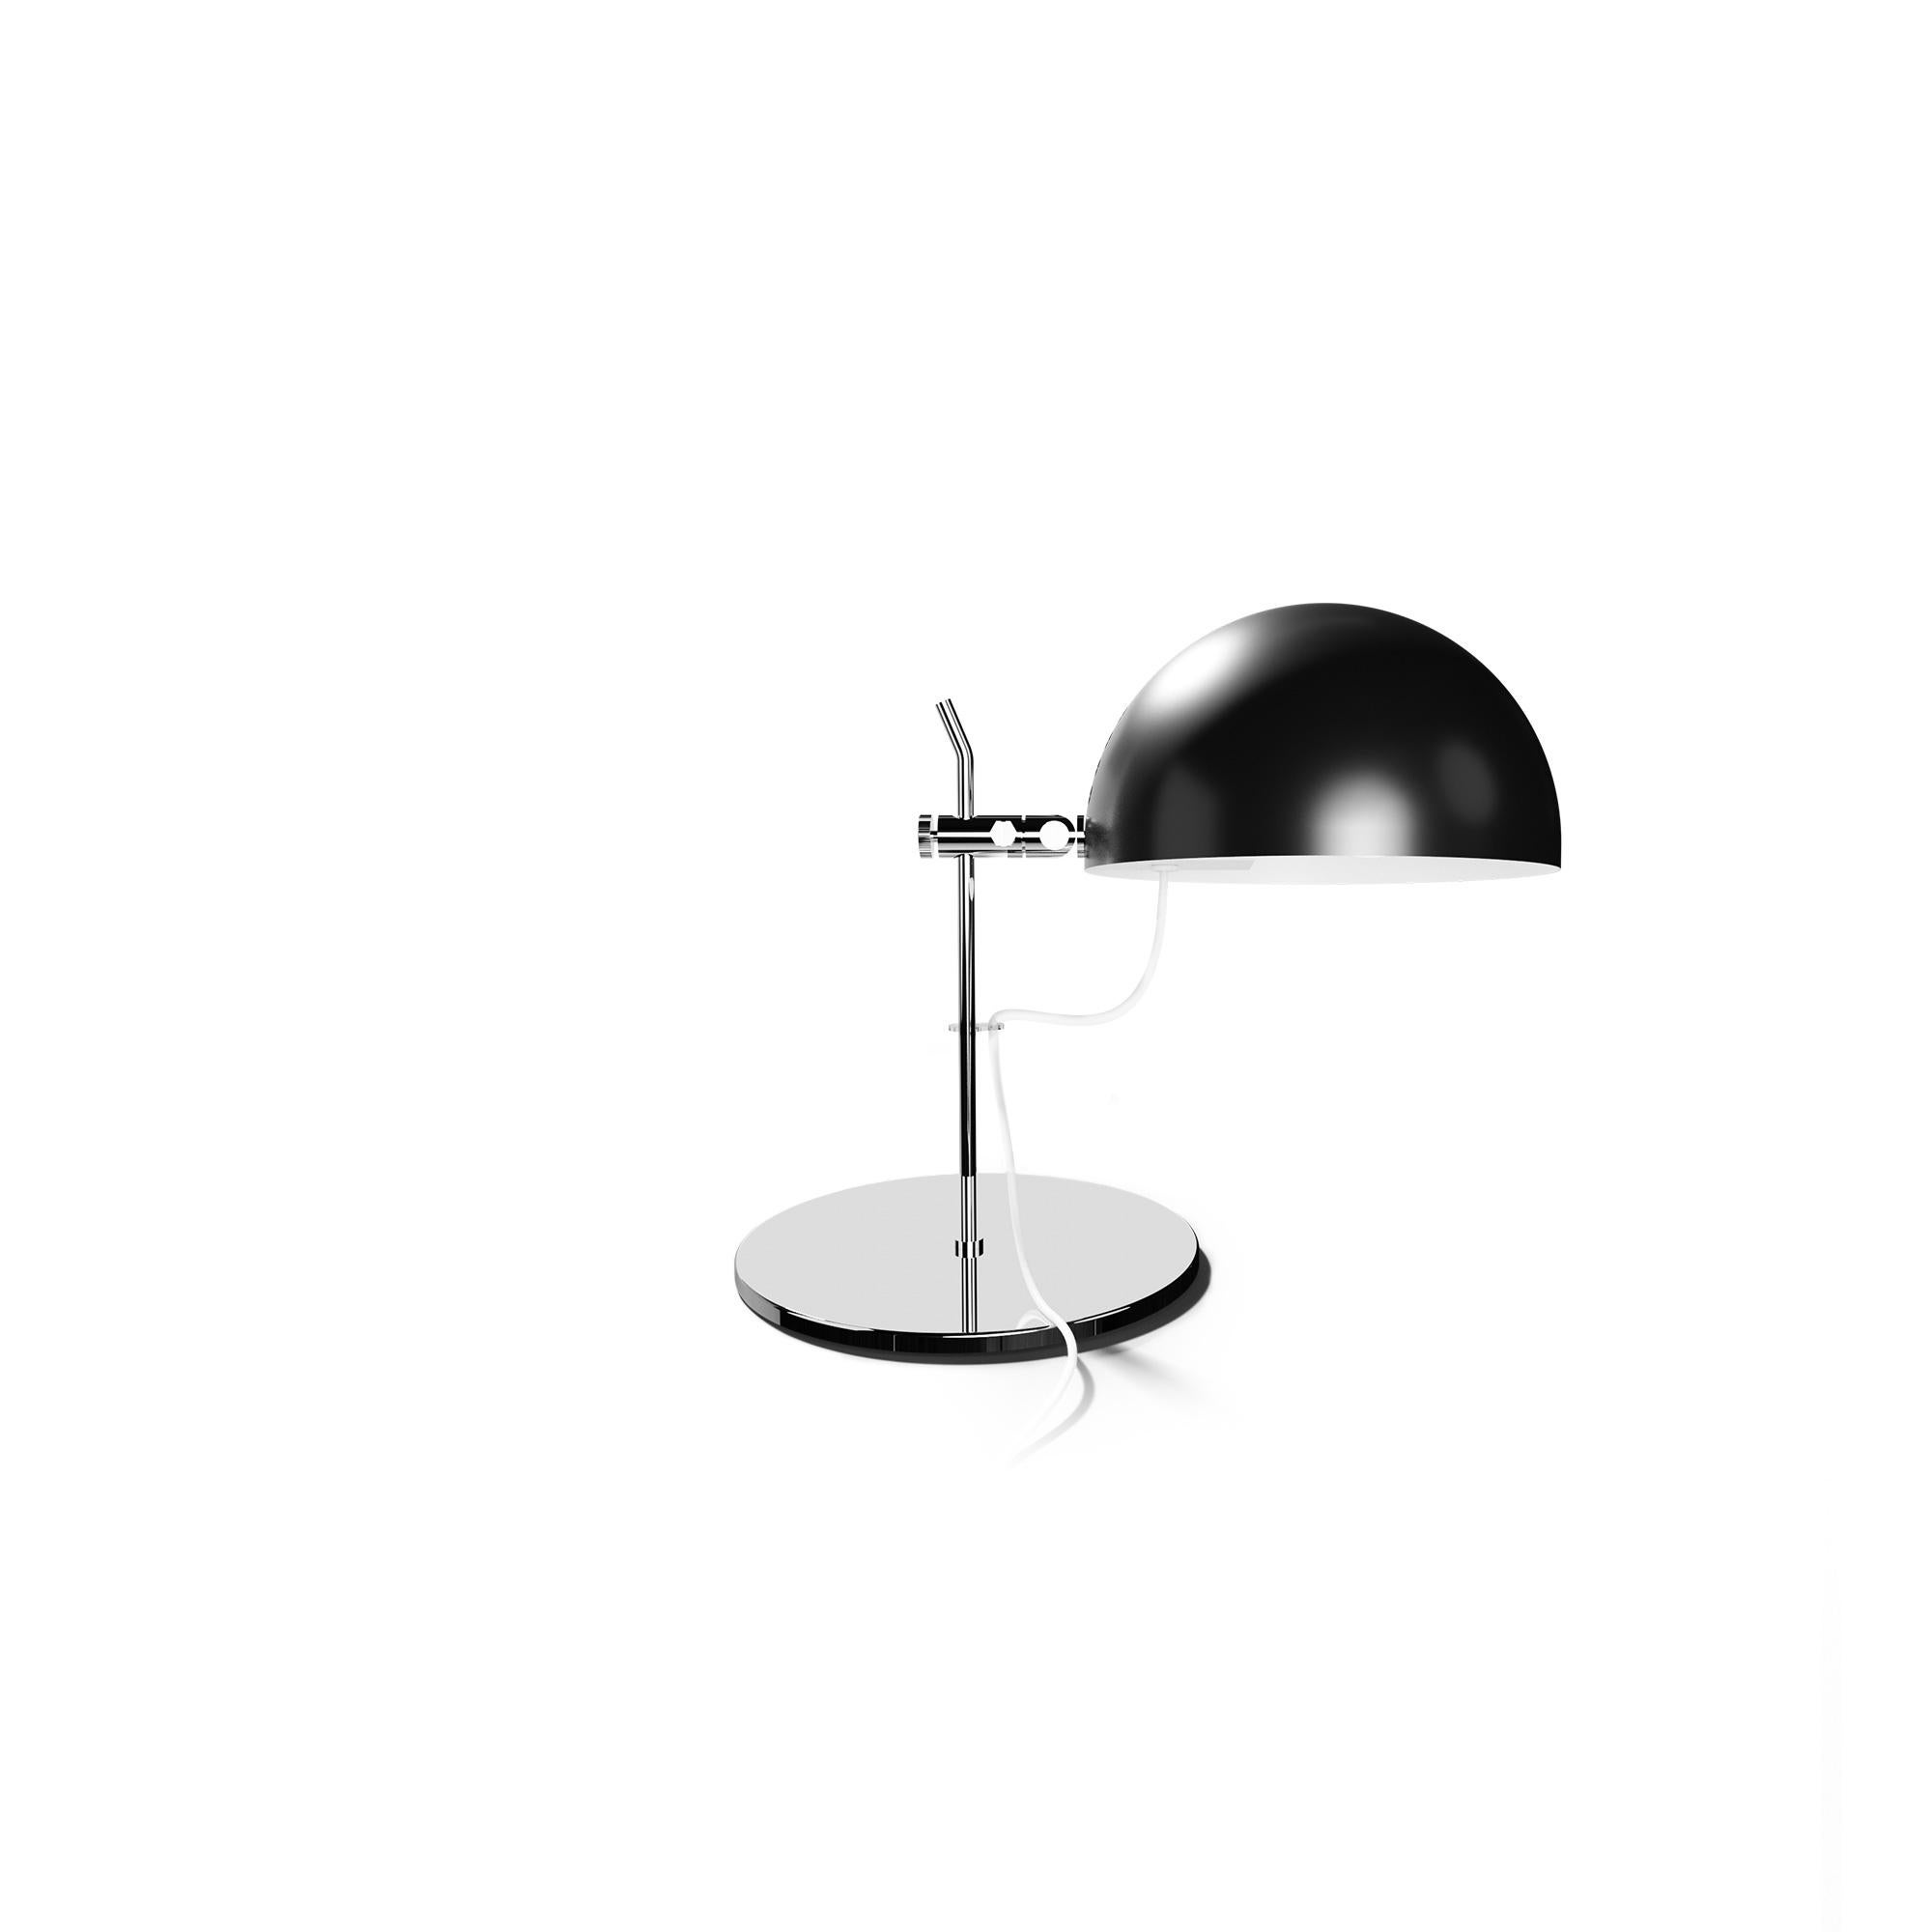 Alain Richard 'A23' Chrome and Marble Floor Lamp for Disderot For Sale 5